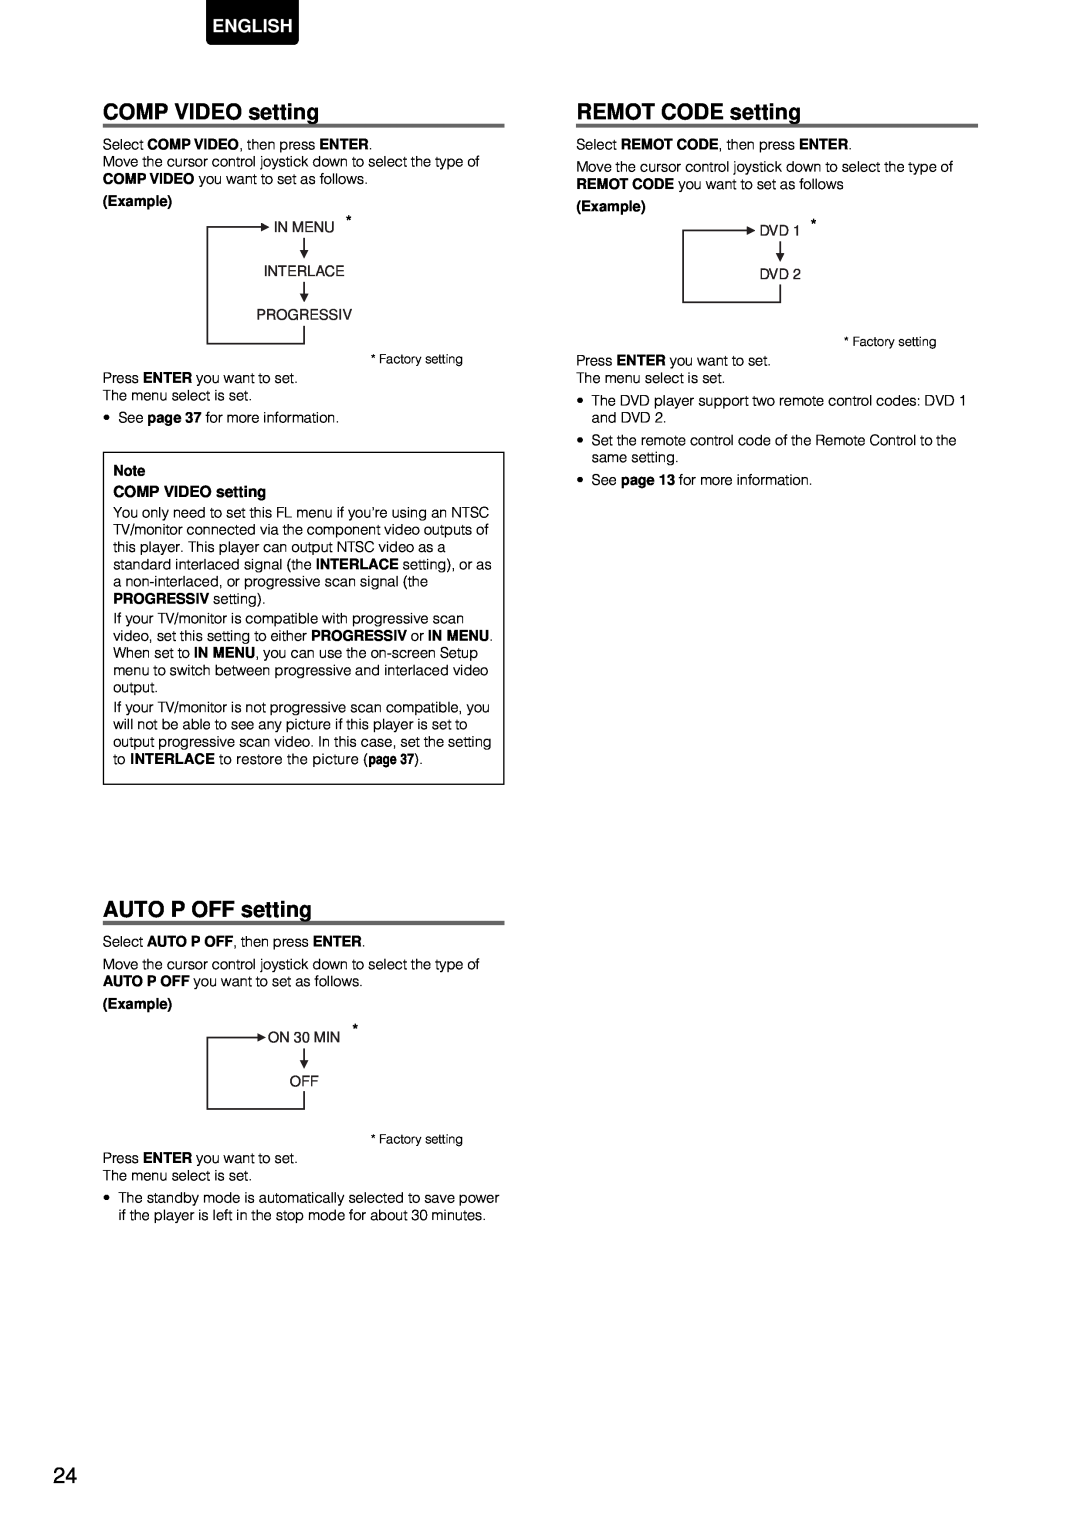 Marantz DV-12S1 manual COMP VIDEO setting, AUTO P OFF setting, REMOT CODE setting, English, Example 